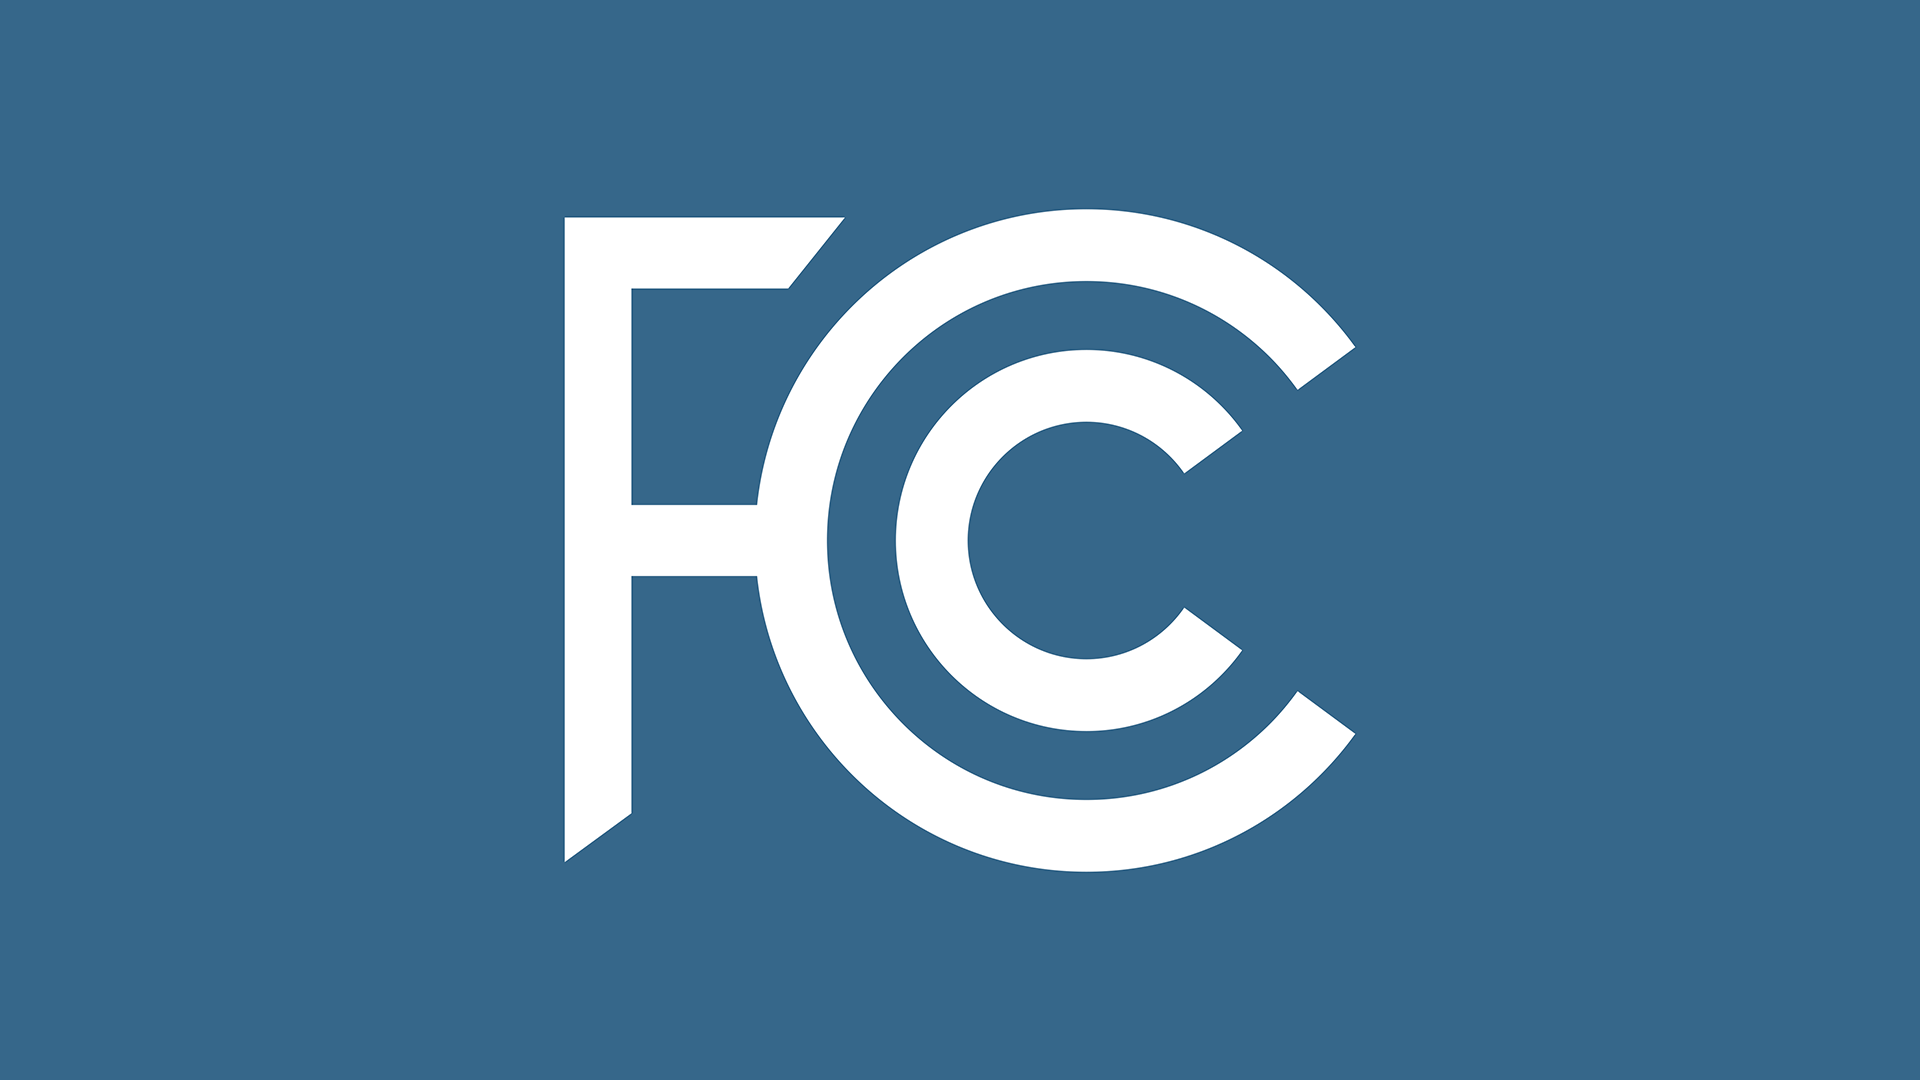 fcc-logo_white-on-dark-blue